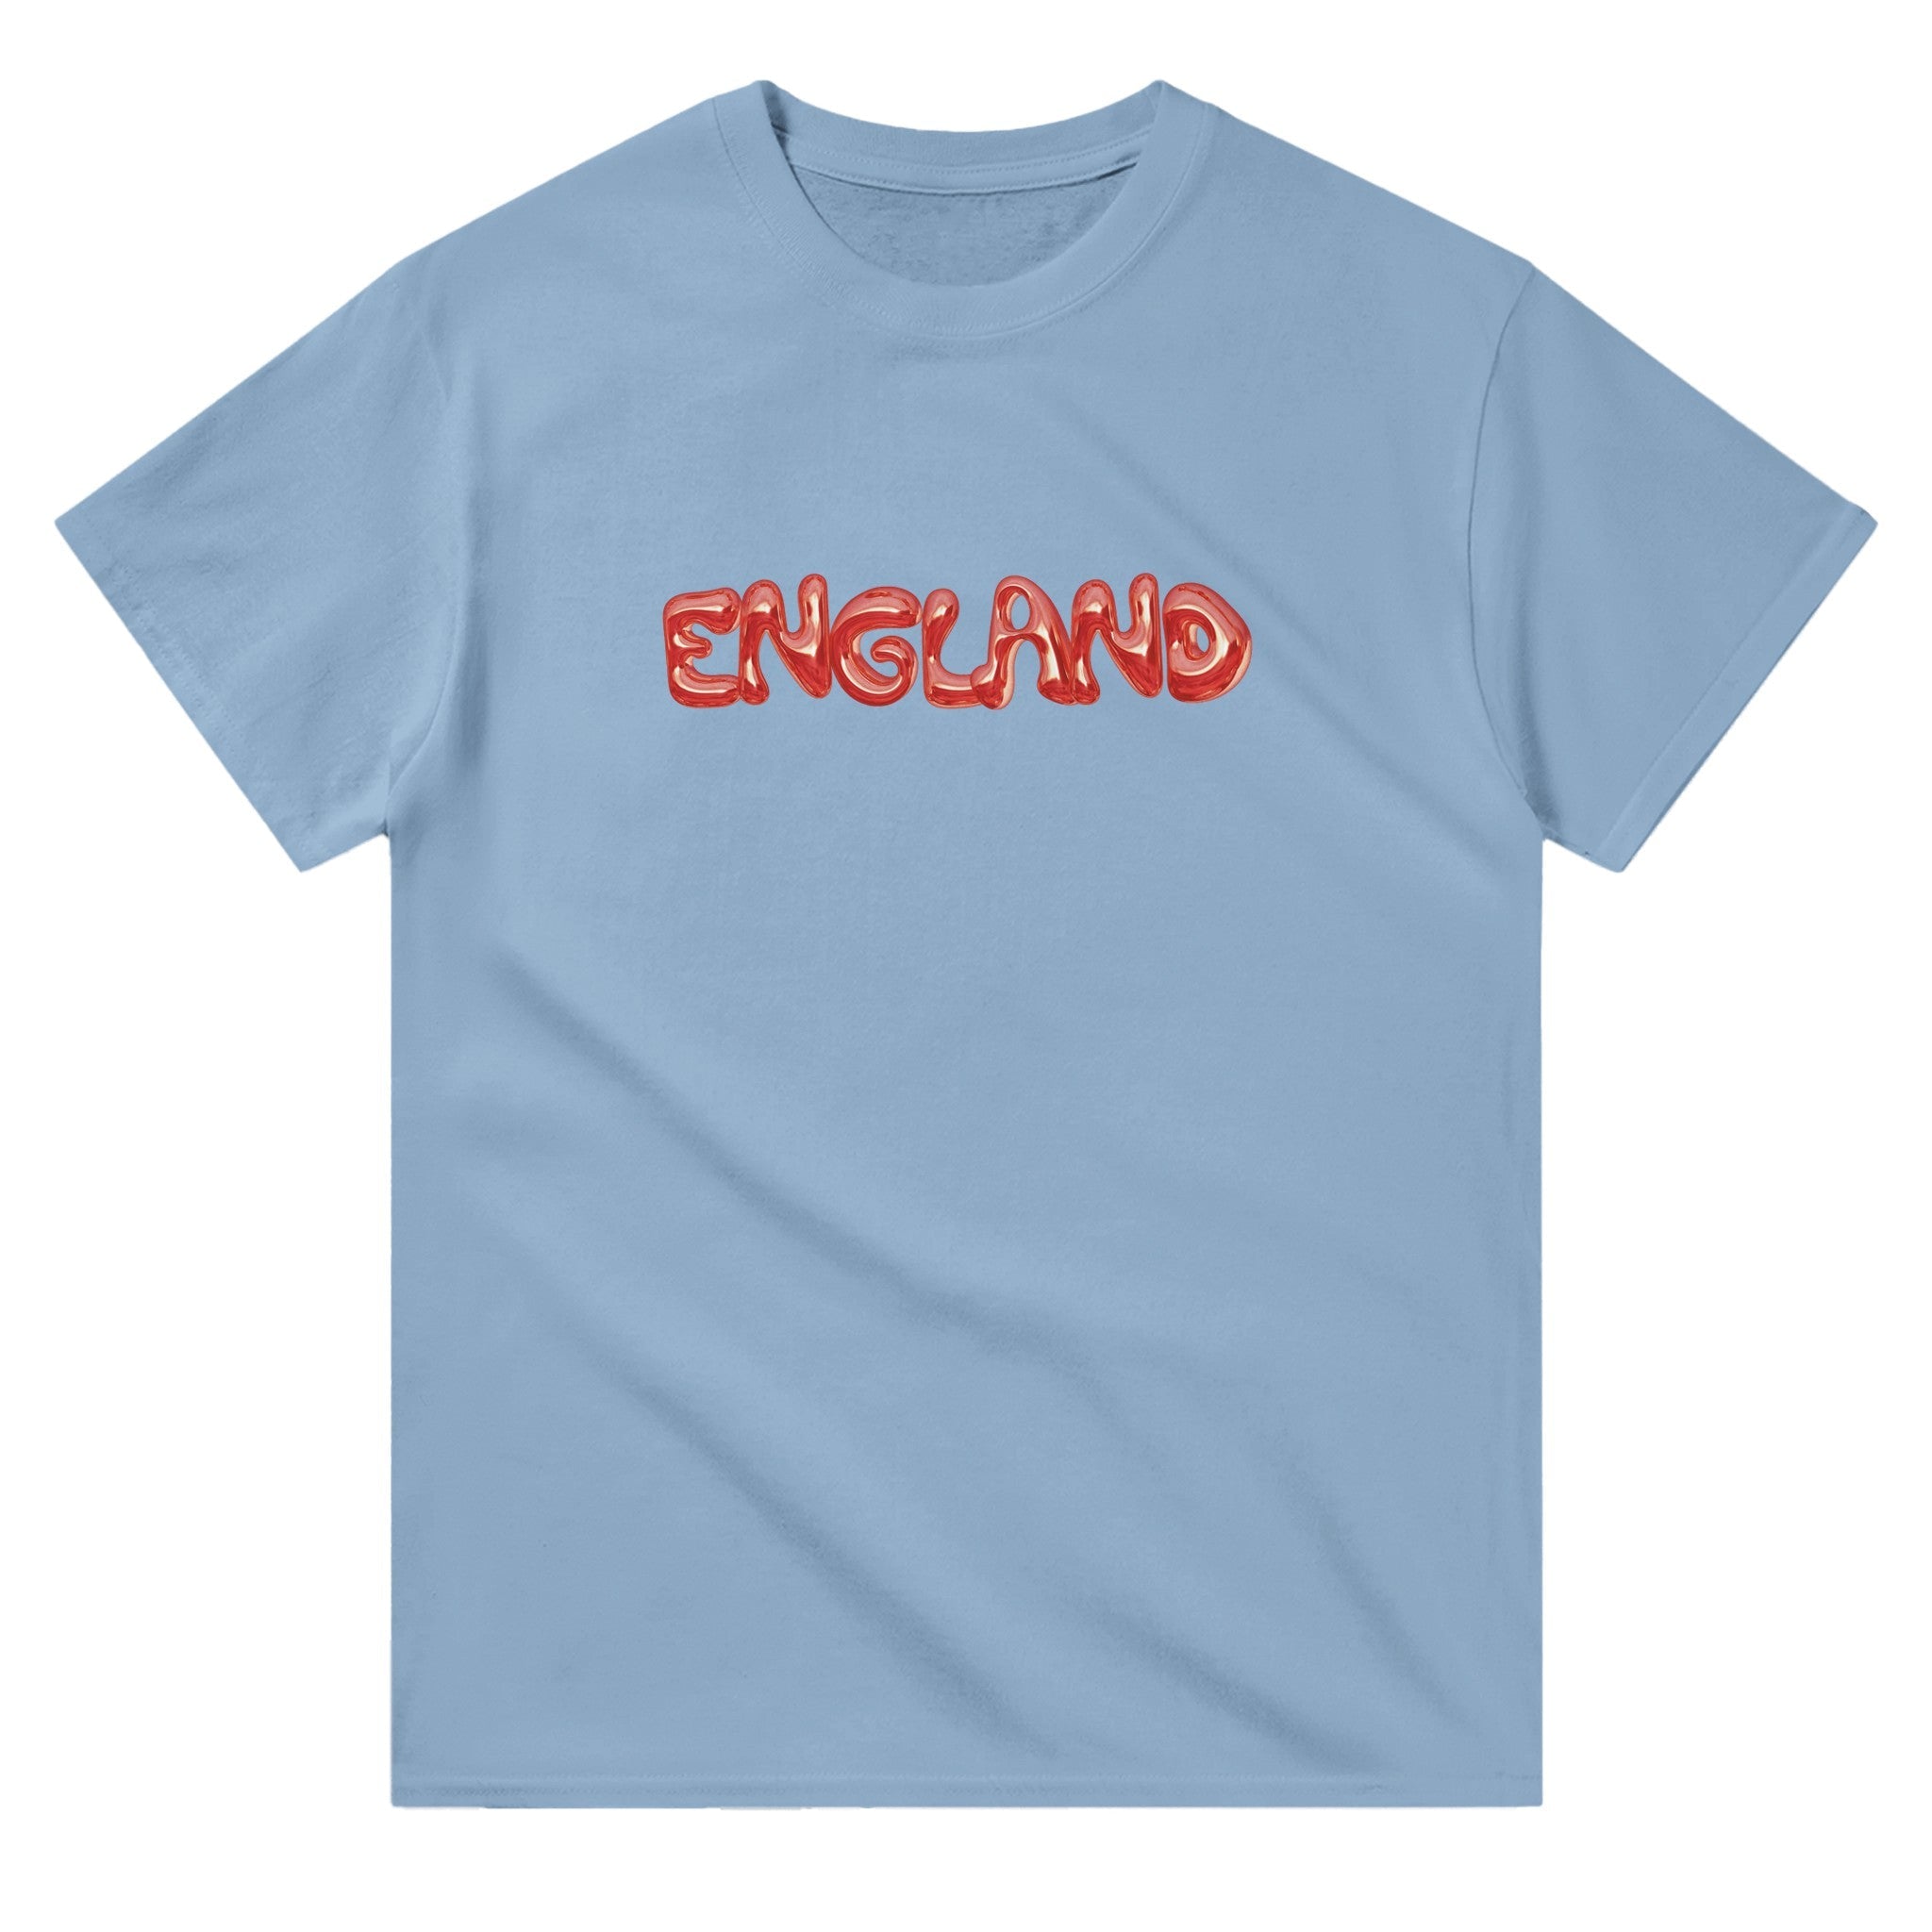 'England' classic tee - In Print We Trust